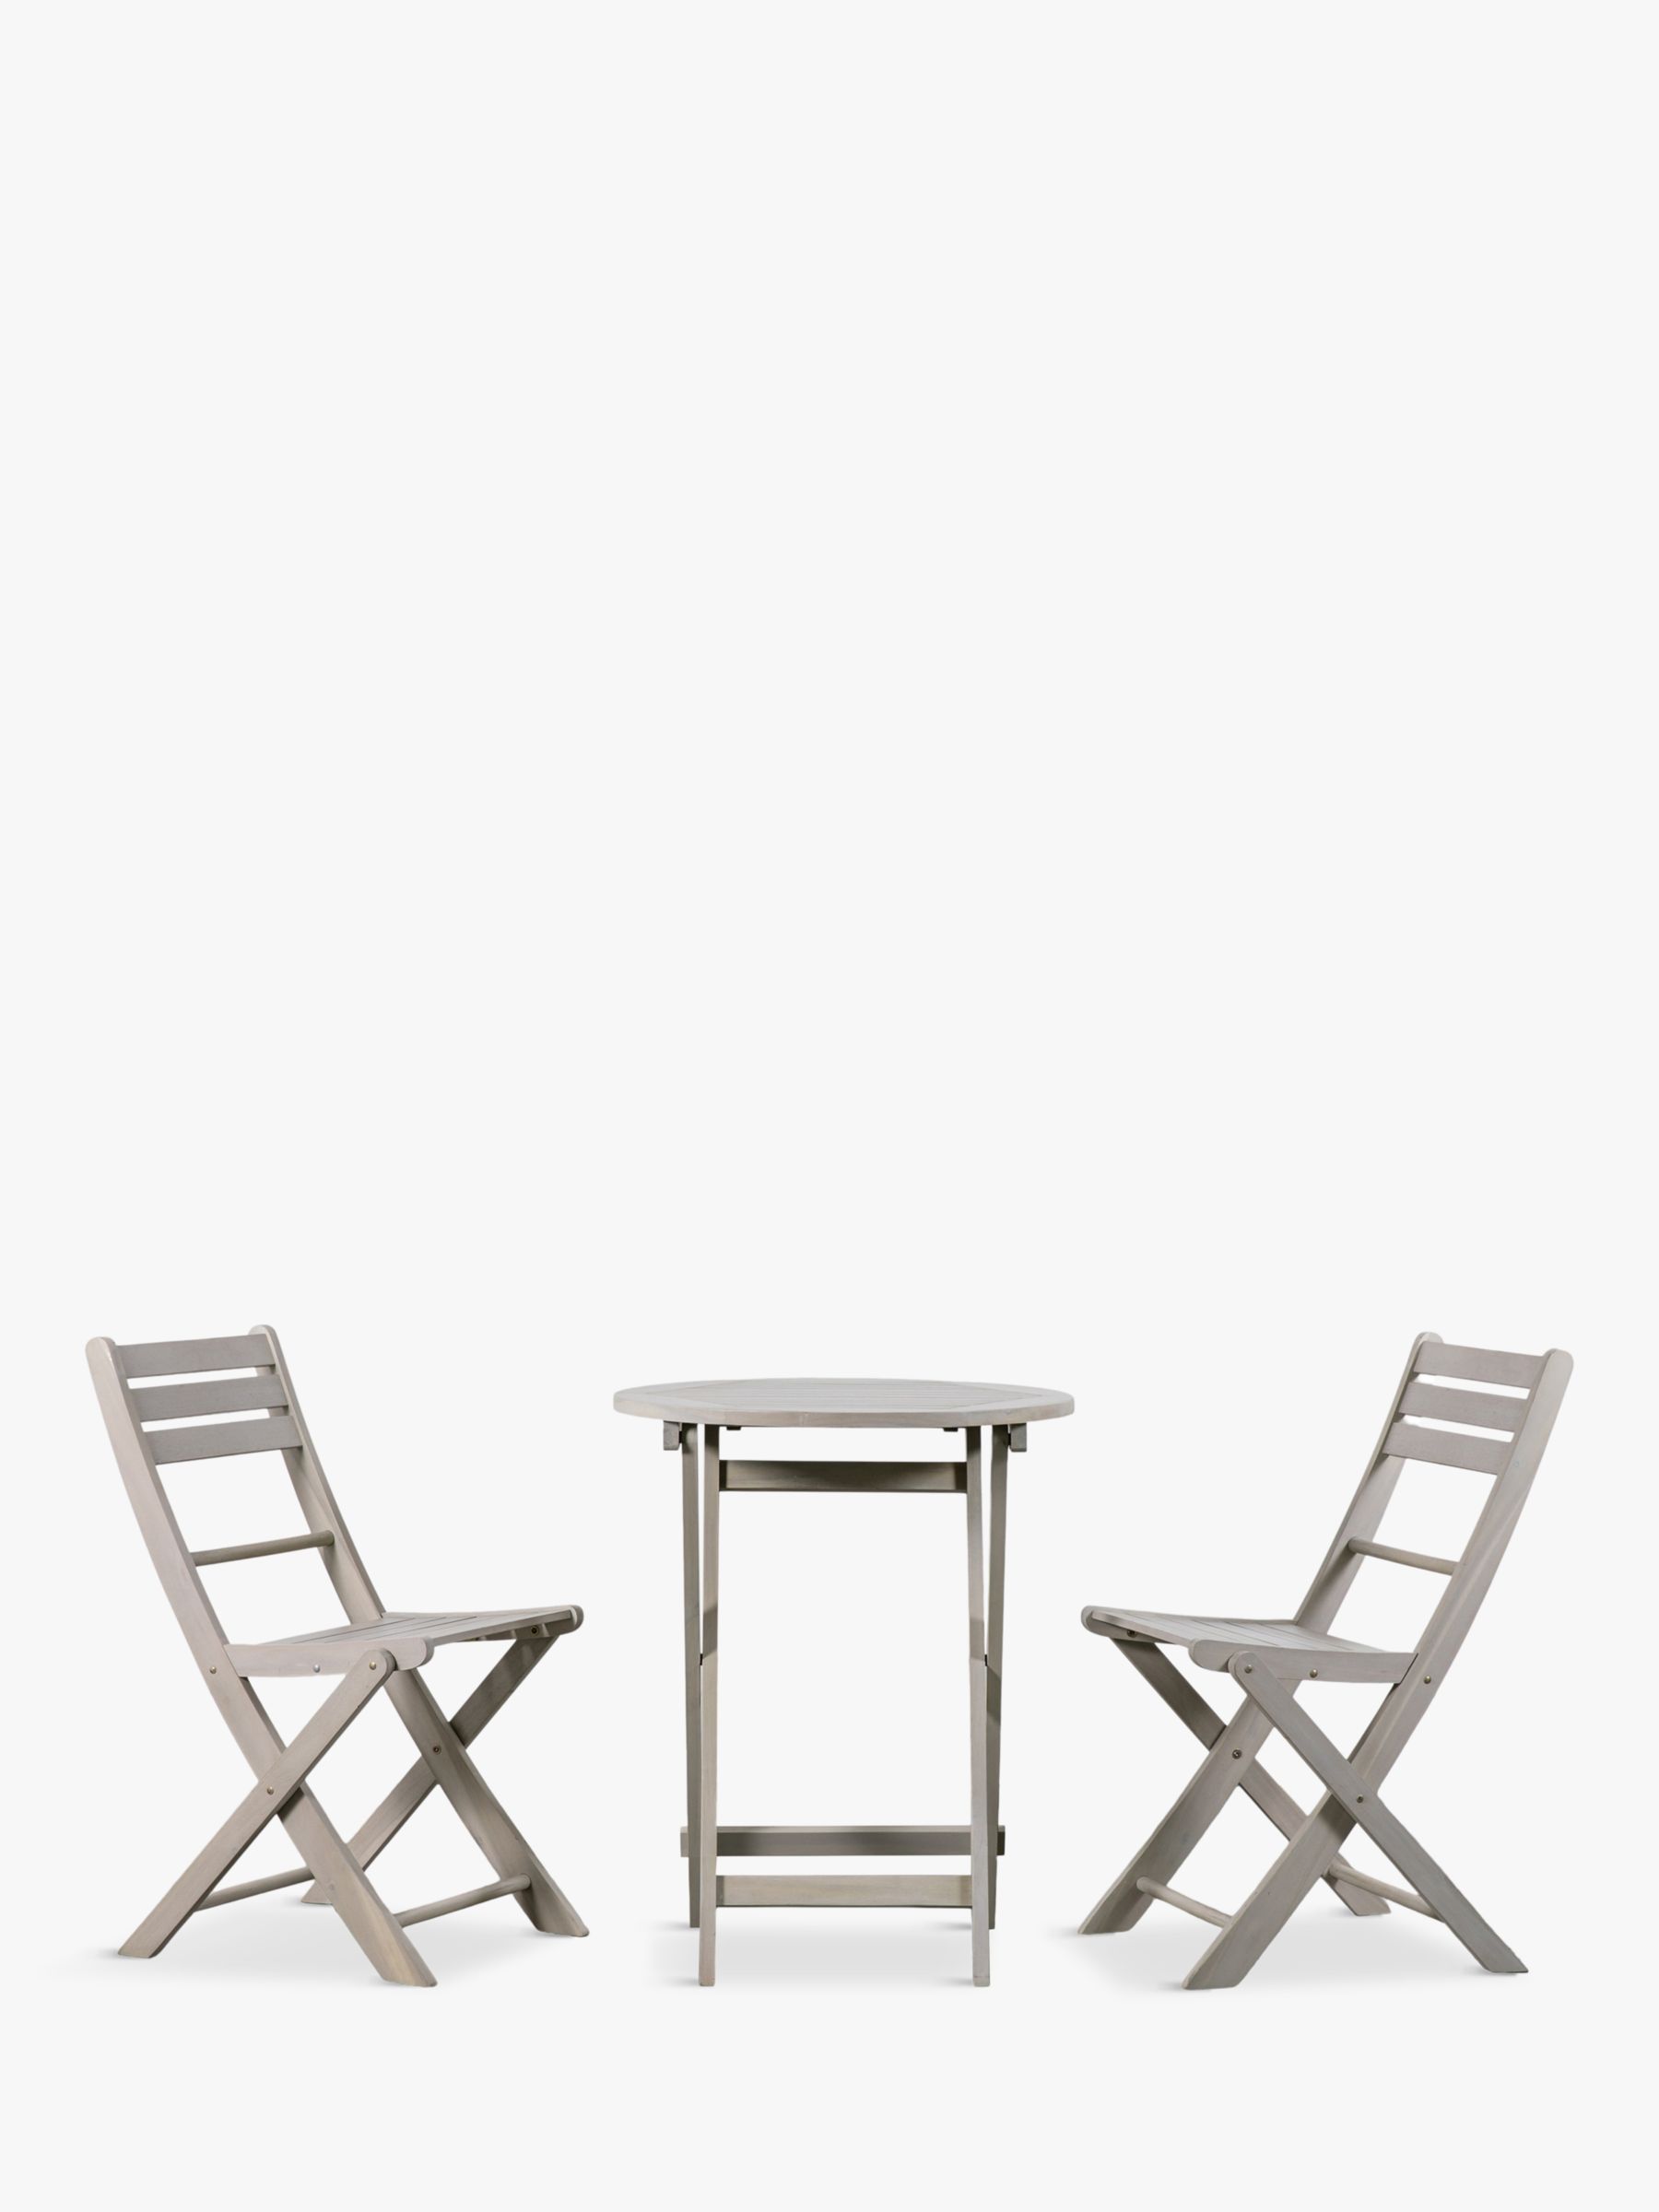 Photo of Gallery direct sacra 2-seater acacia wood folding garden bistro table & chairs set whitewash